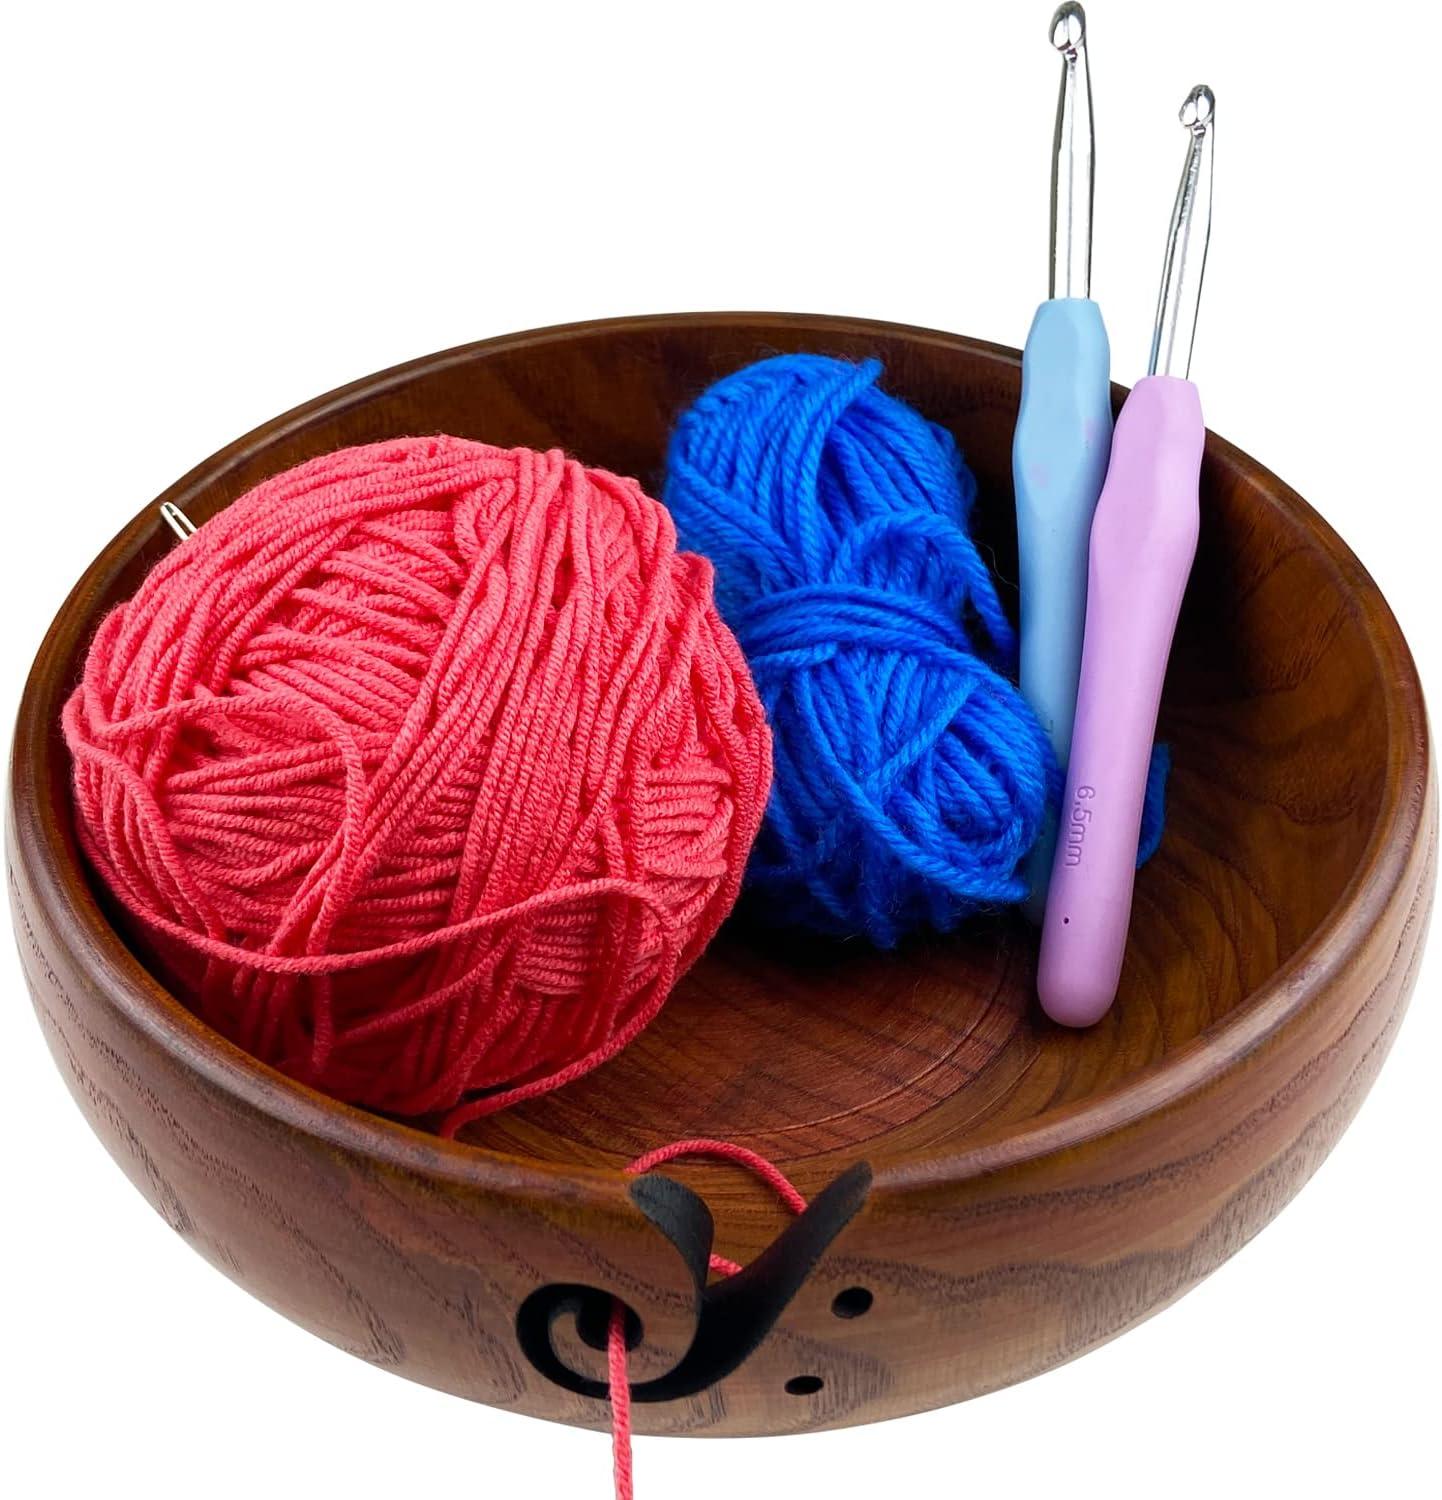 Wenqik 2 Pieces Wooden Yarn Bowl 5.9'' x 3'' and 6.7'' x 3'' Knitting Yarn  Bowl with Holes Yarn Holder Yarn Basket Crocheting Accessories Kit